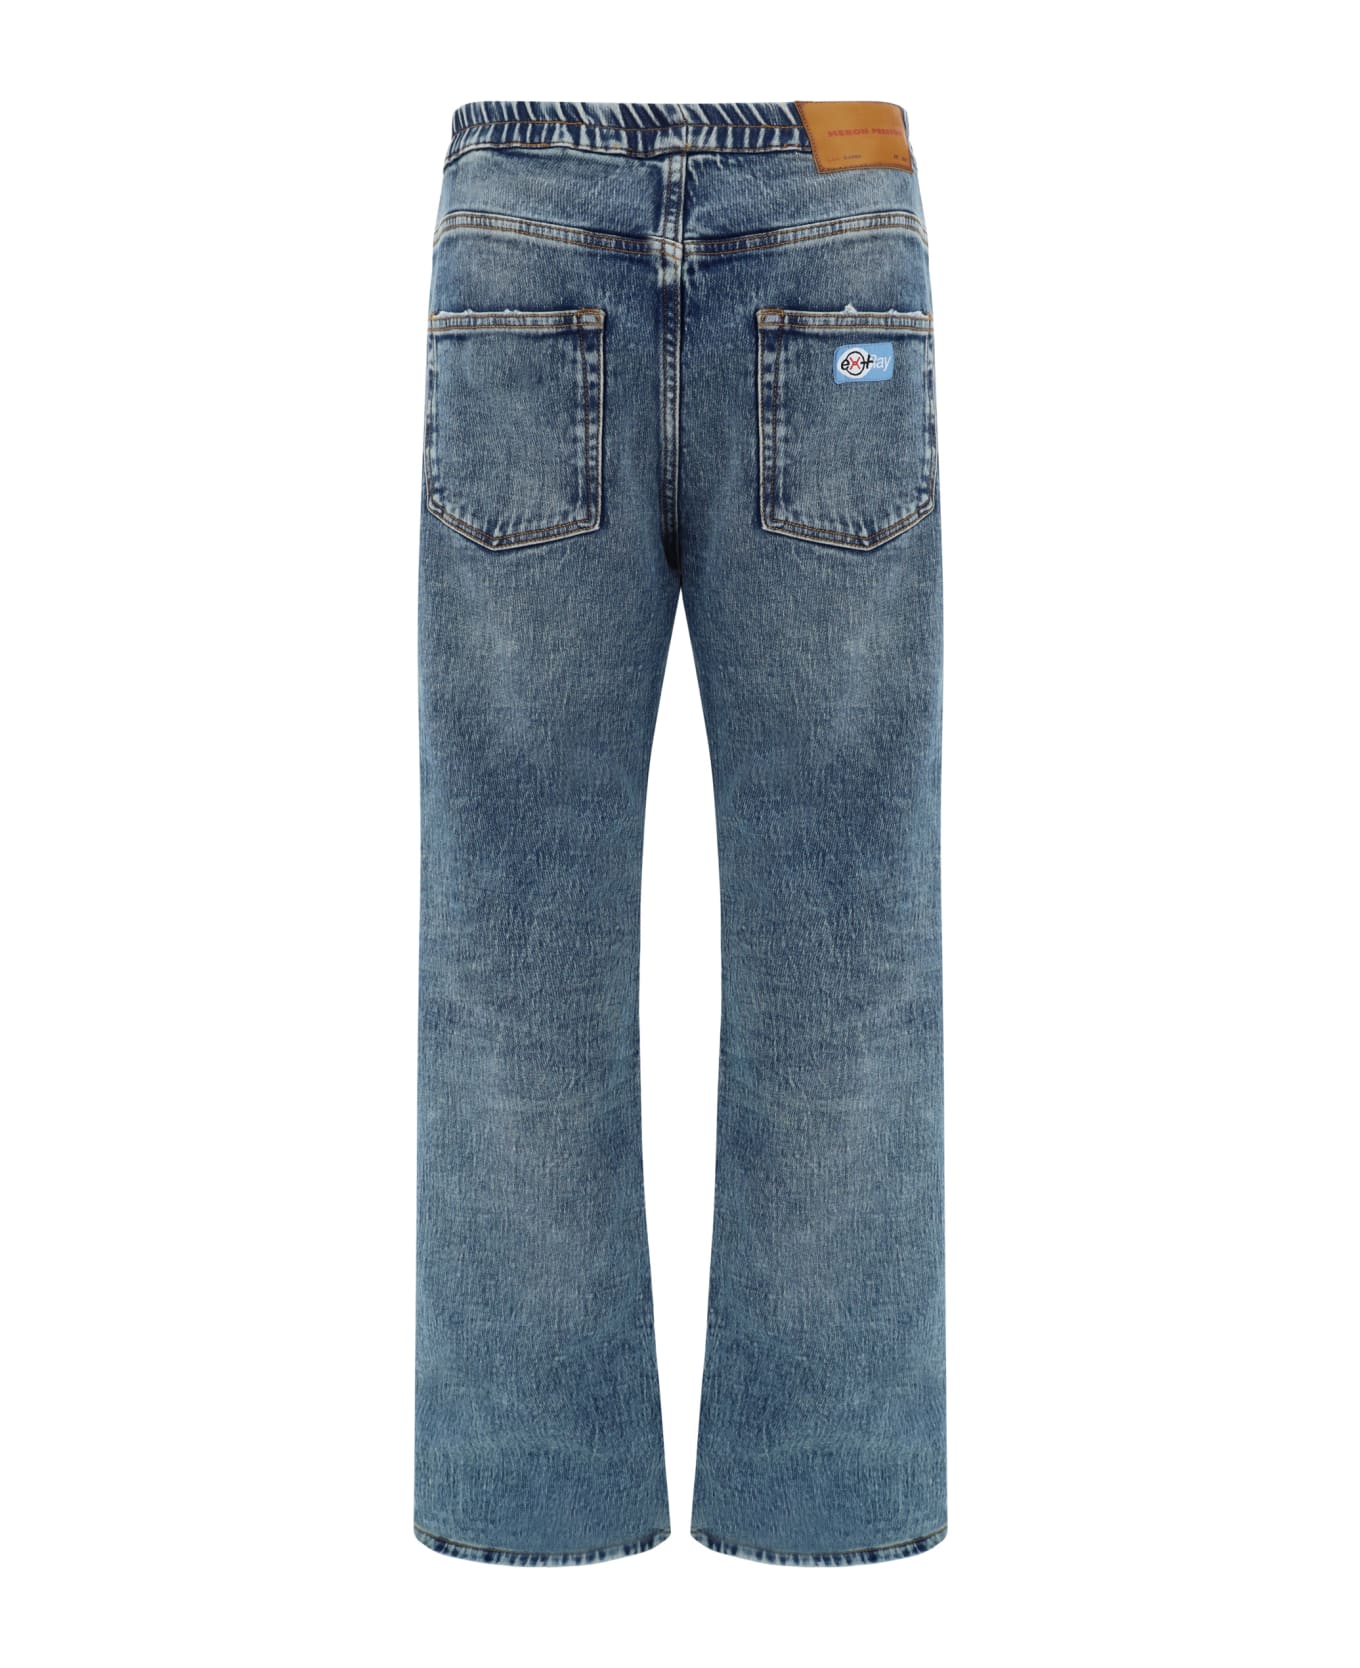 HERON PRESTON Jeans - Indigo